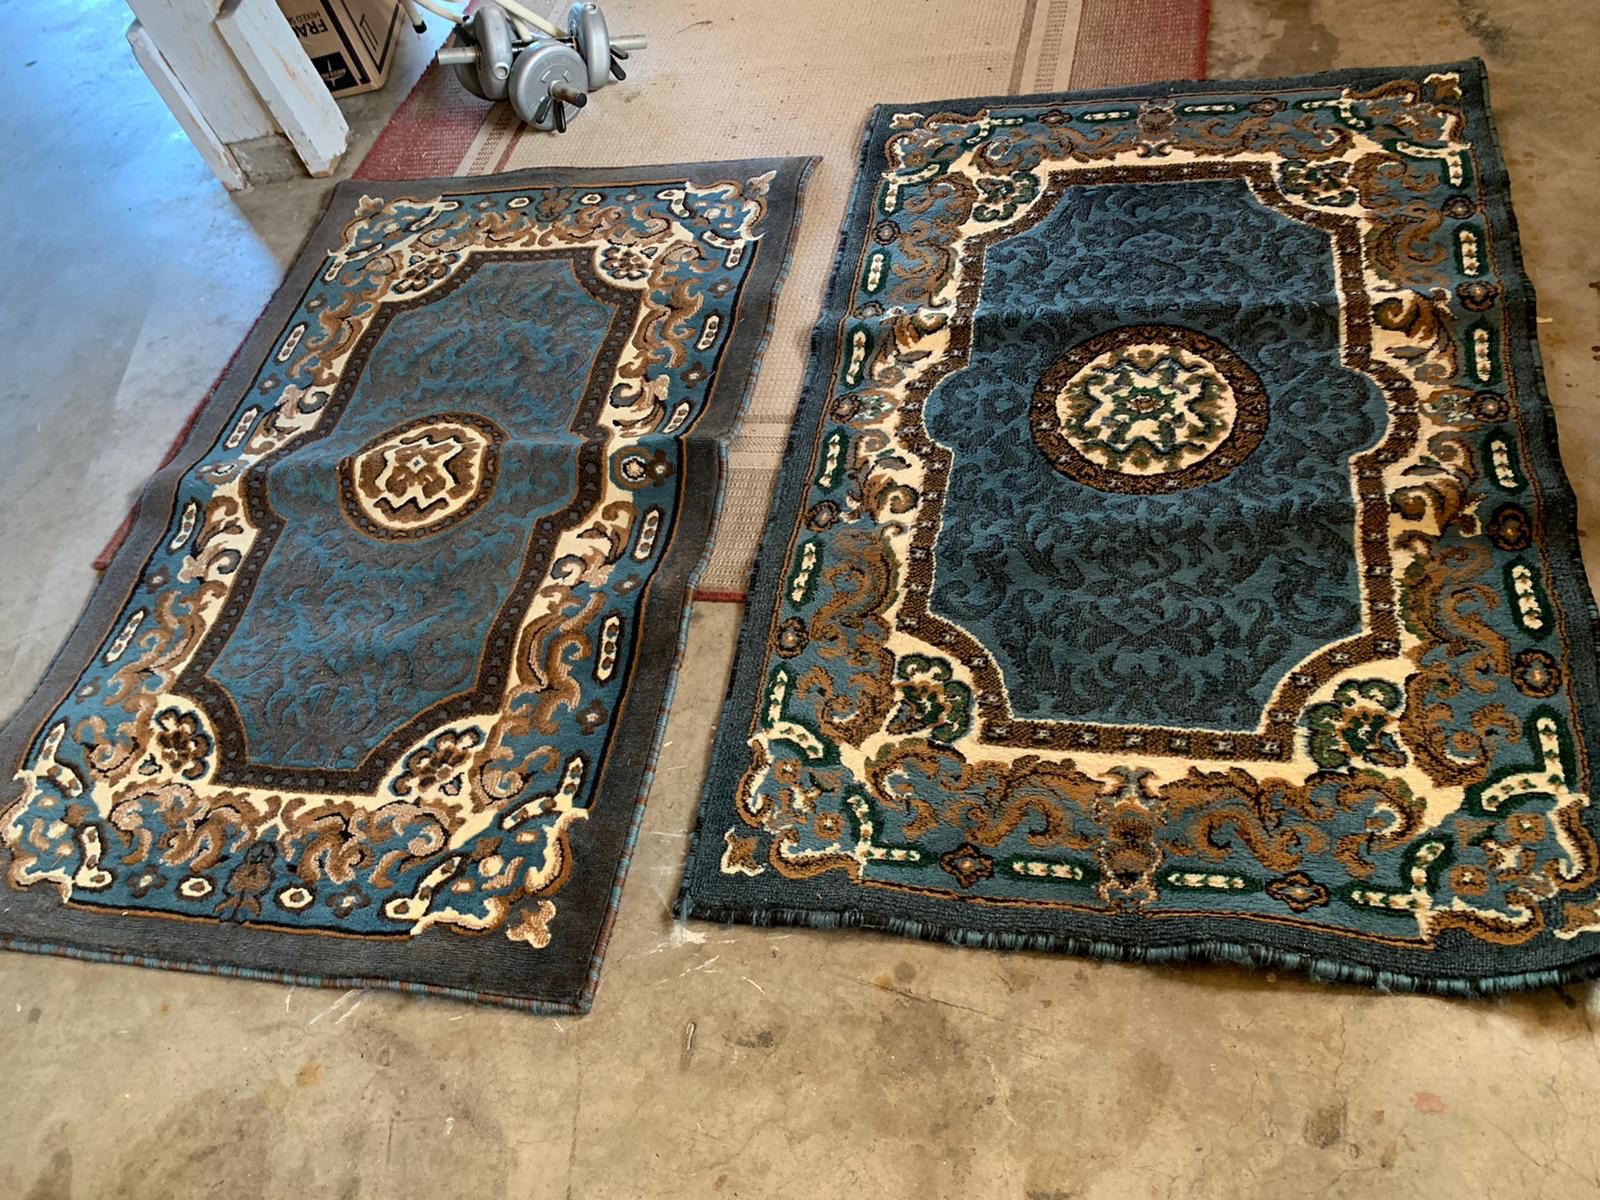 Turkish Carpet Original Bahariye Textile Company Carpet Blue Design $10 each